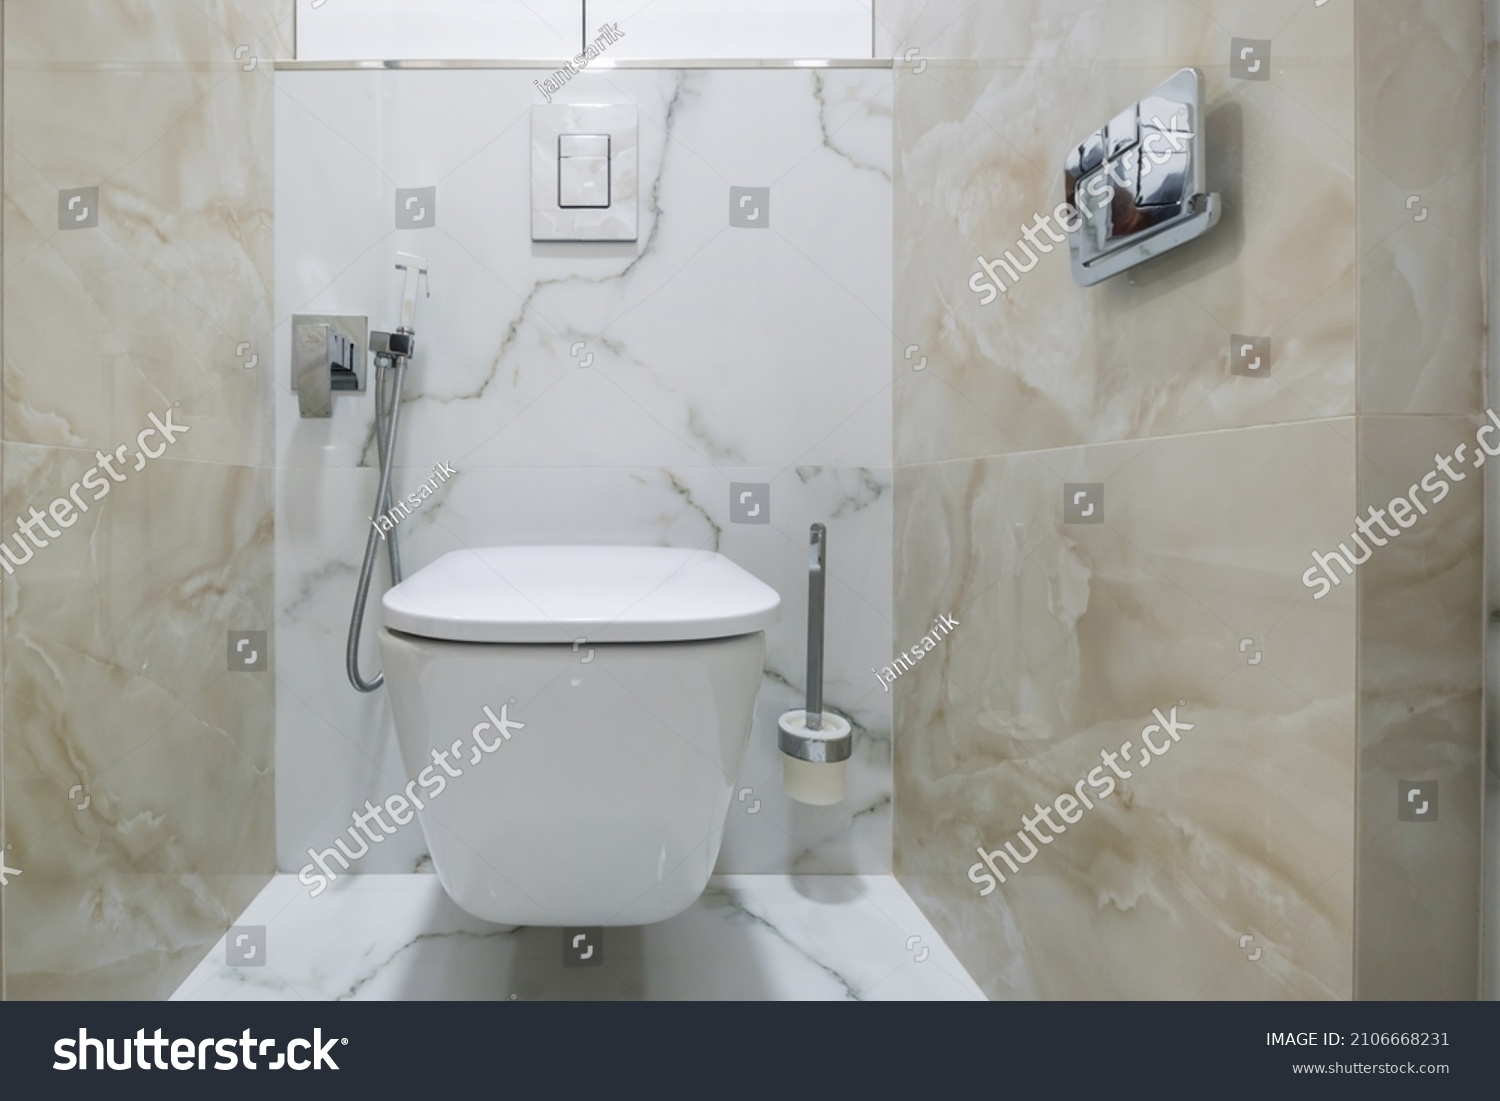 1,483 Toilet sprinkler Images, Stock Photos & Vectors | Shutterstock